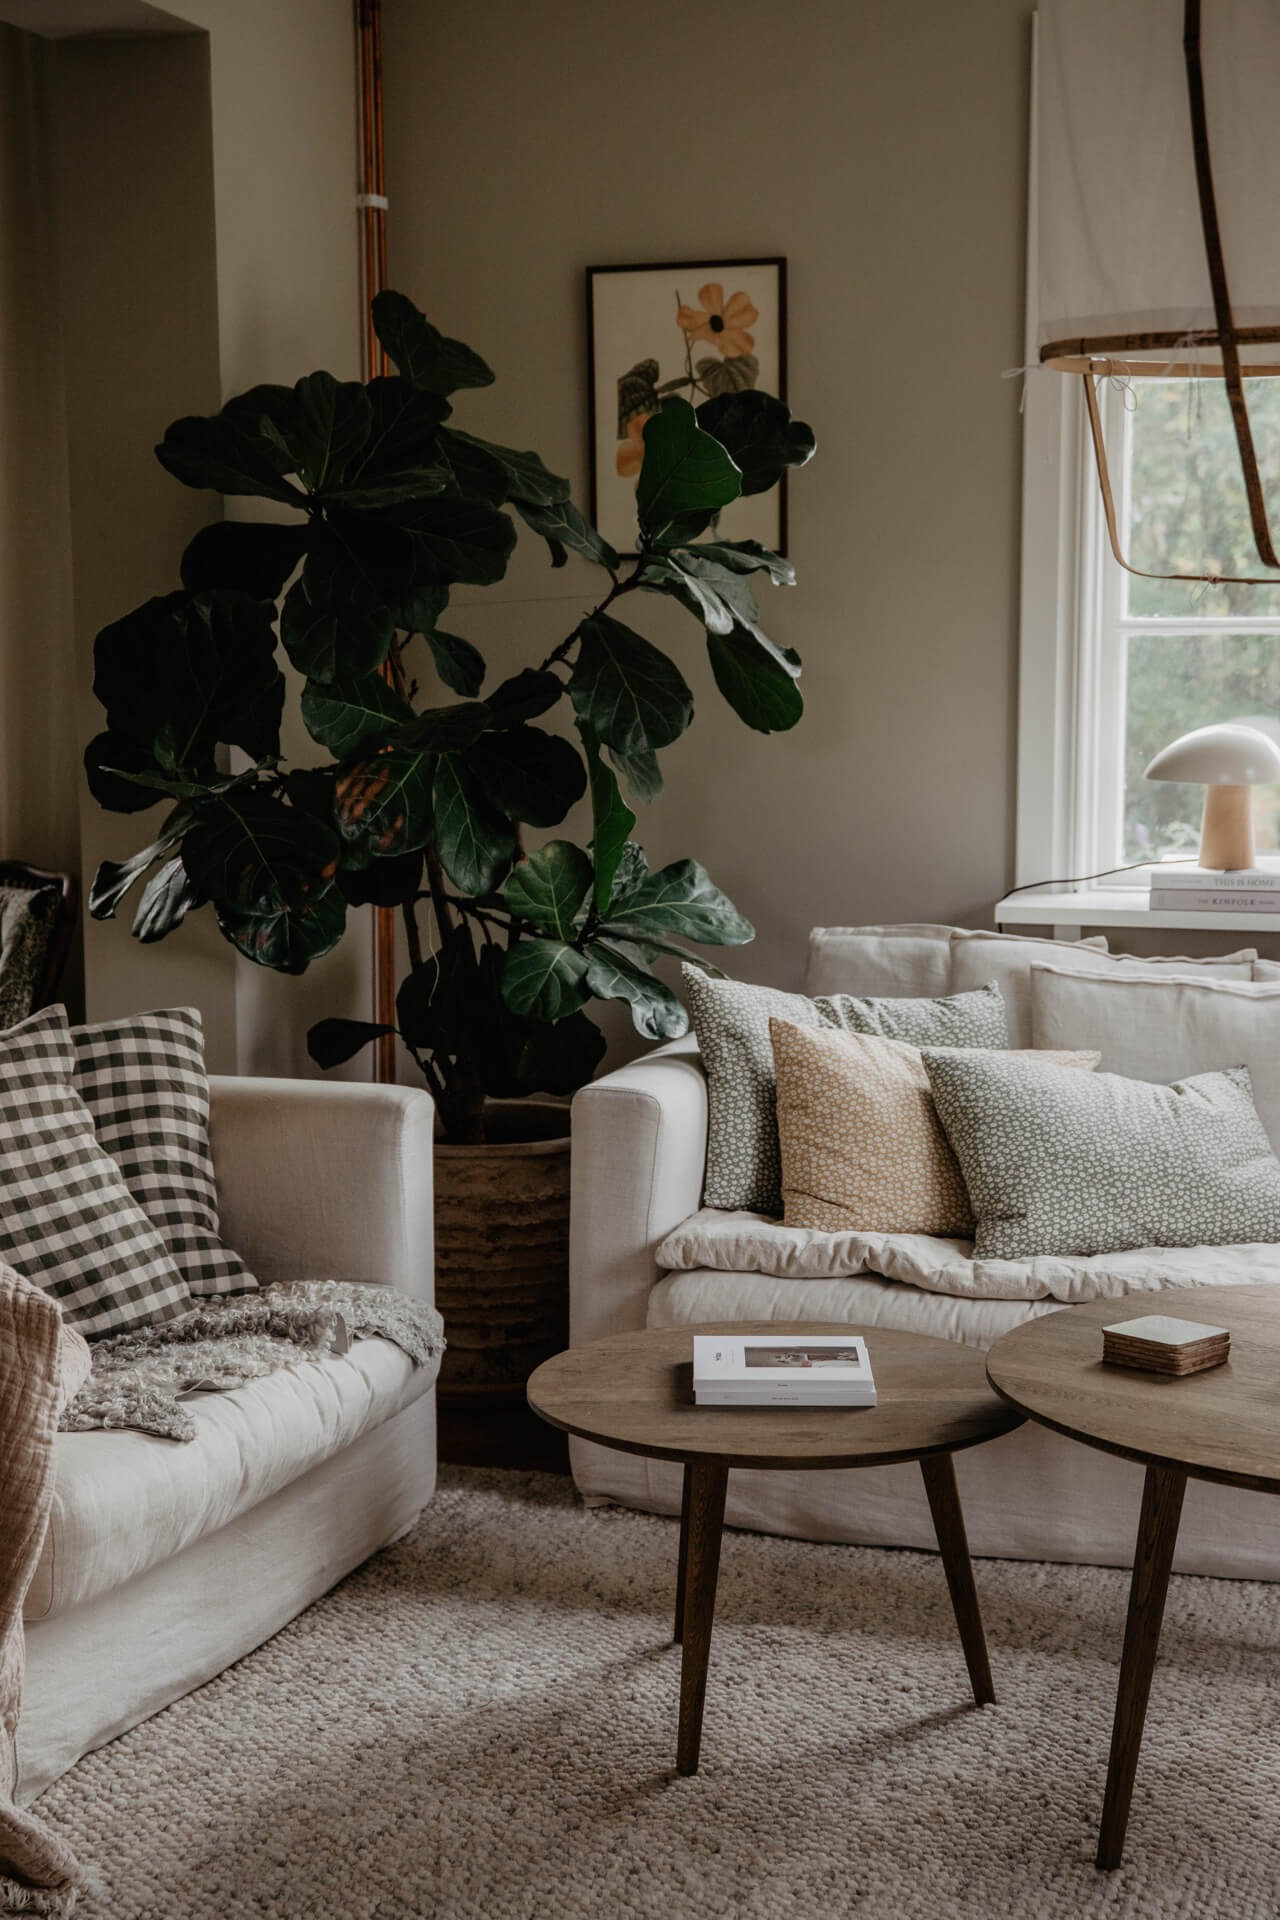 Emelie Sundberg home tour - interior of Swedish home - cosy living room with large fiddle leaf fig plant